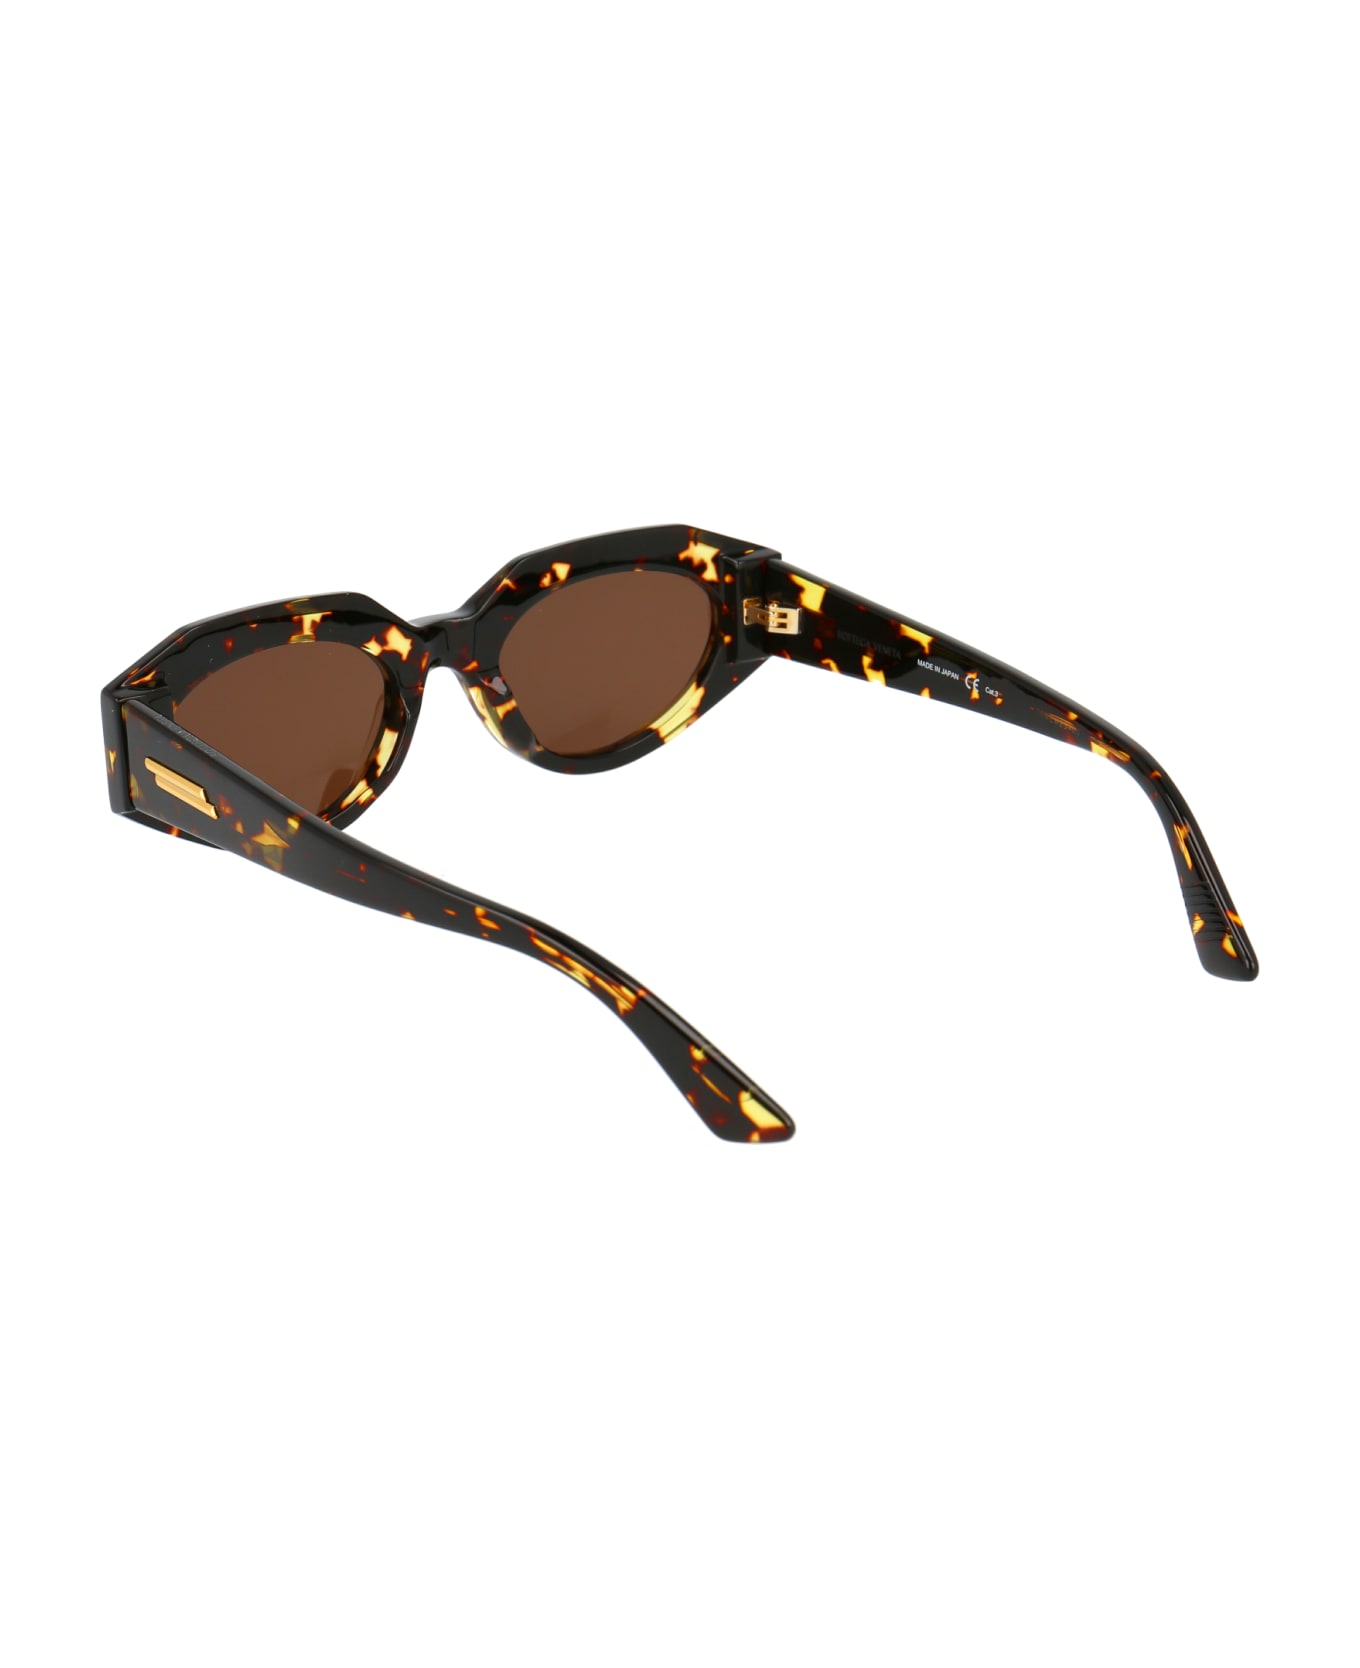 Bottega Veneta Eyewear Bv1031s Sunglasses - 002 HAVANA HAVANA BROWN サングラス